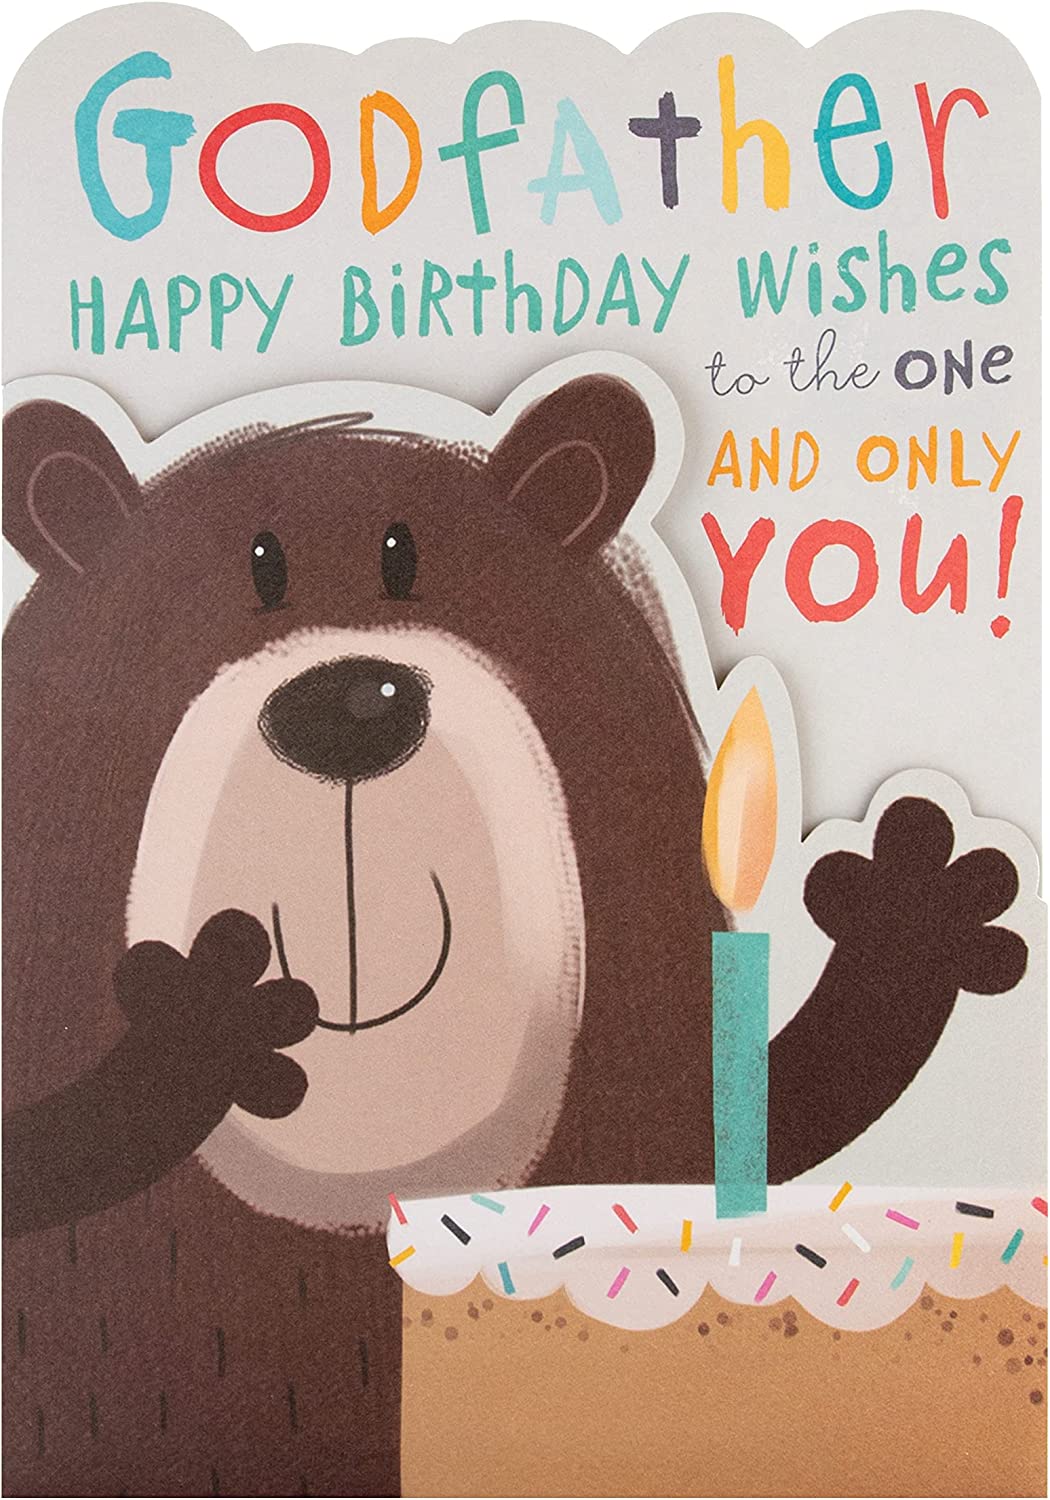 Godfather Birthday Card - A Cake Wth Gus